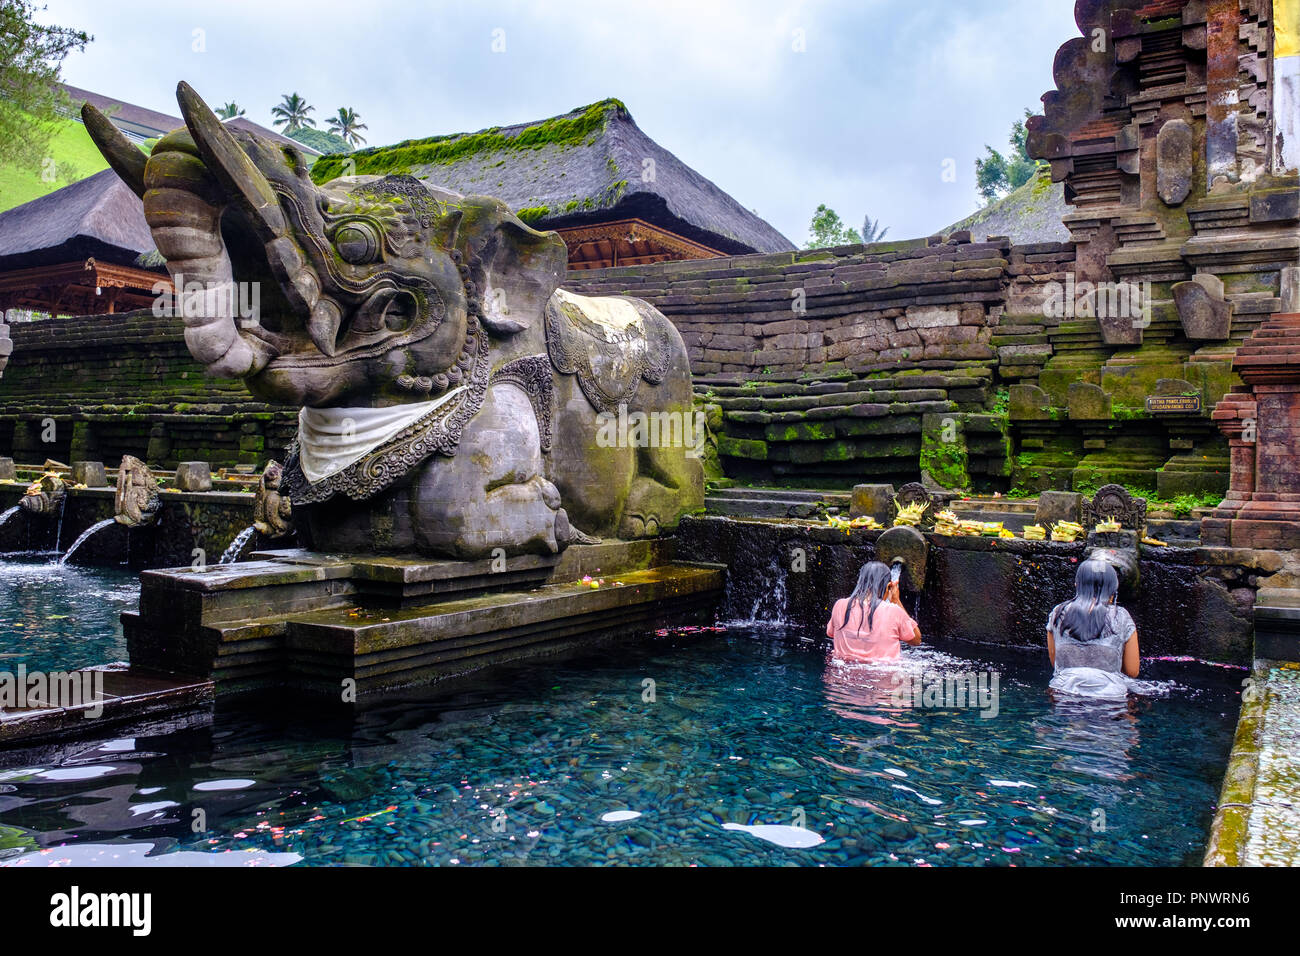 Balinese people taking a ritual purifying bath in holy spring water at Pura Tirta Empul Stock Photo